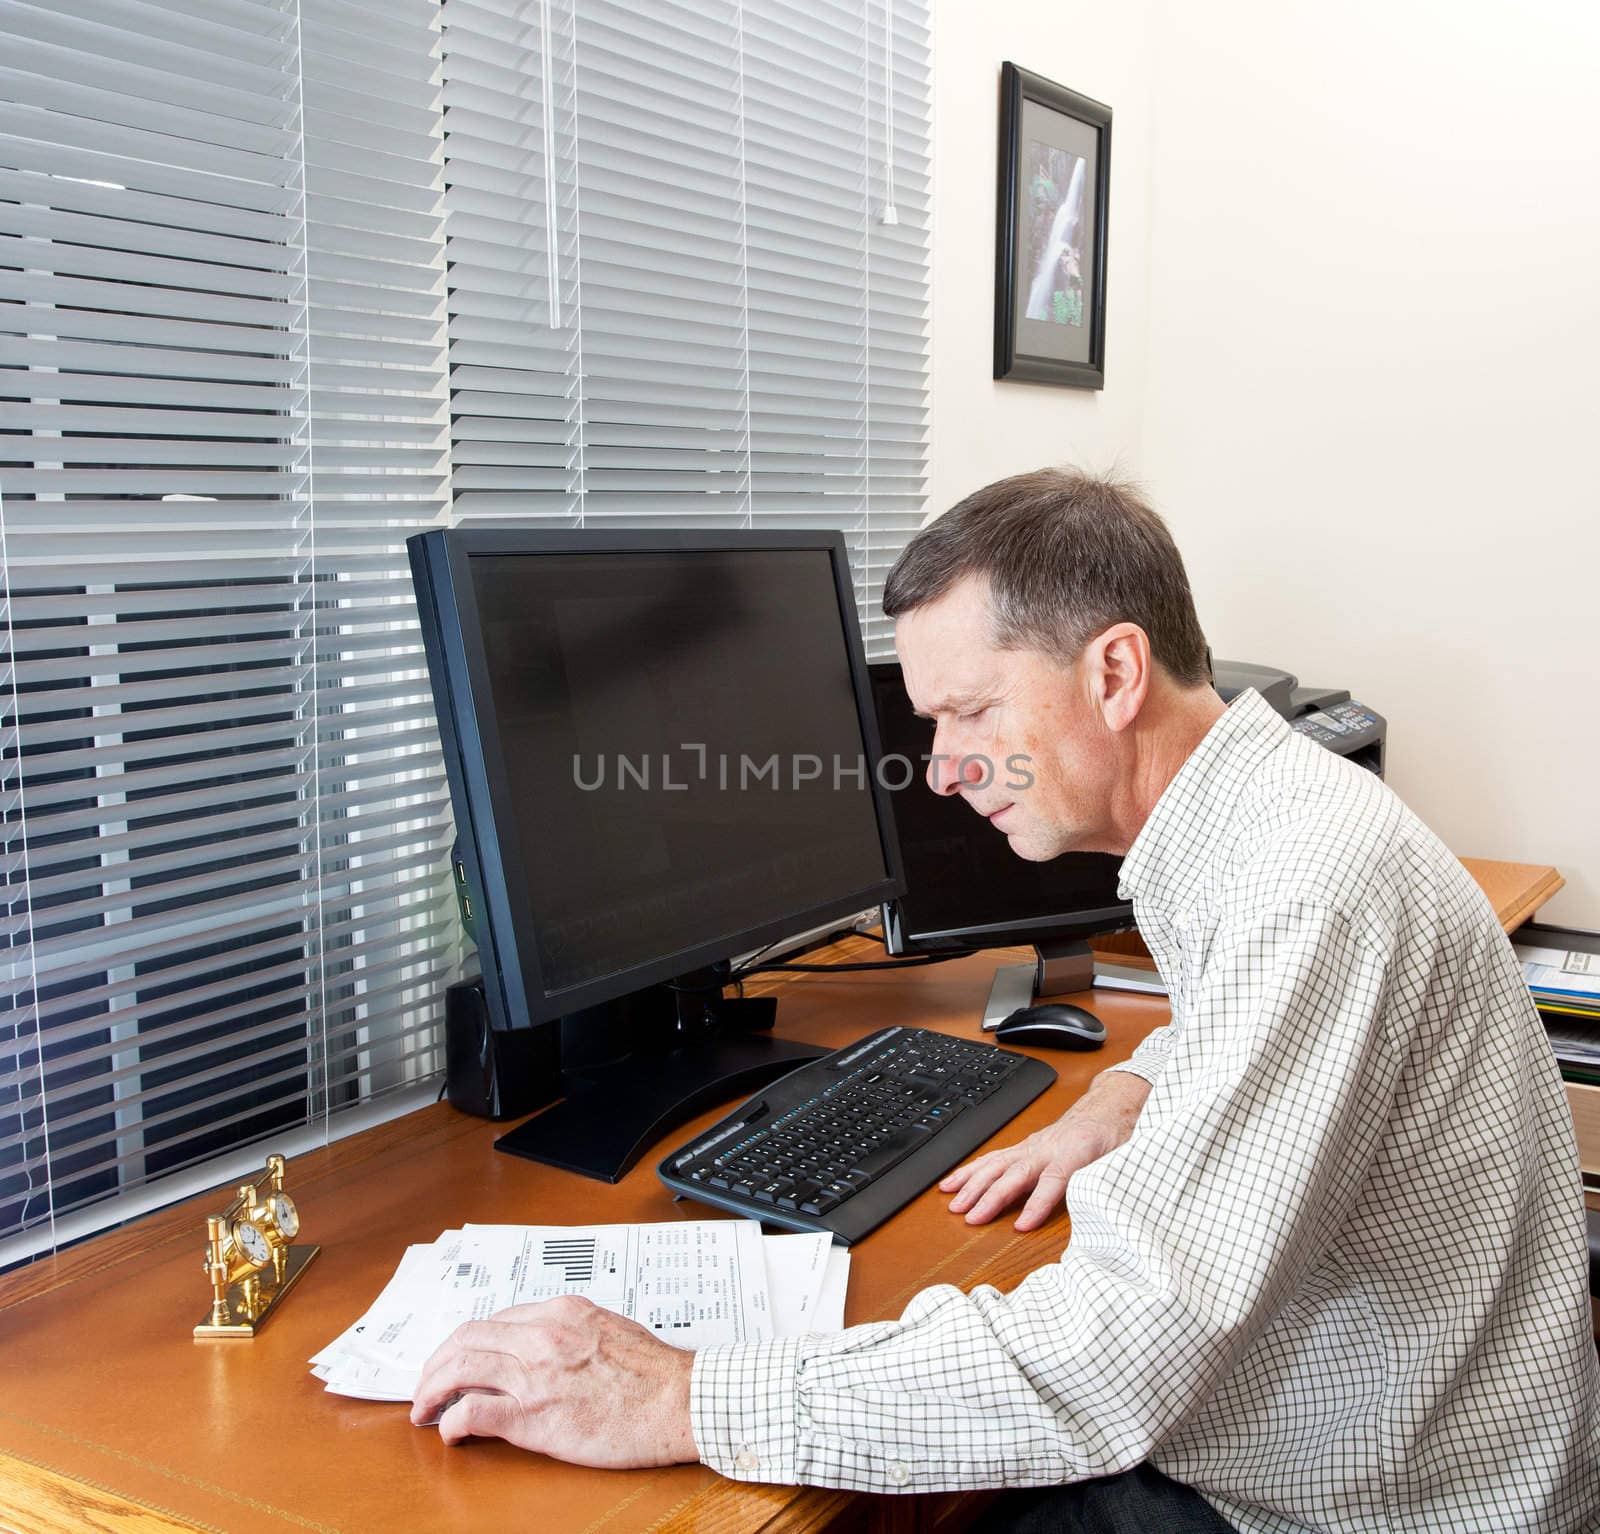 Senior man at computer desk by steheap